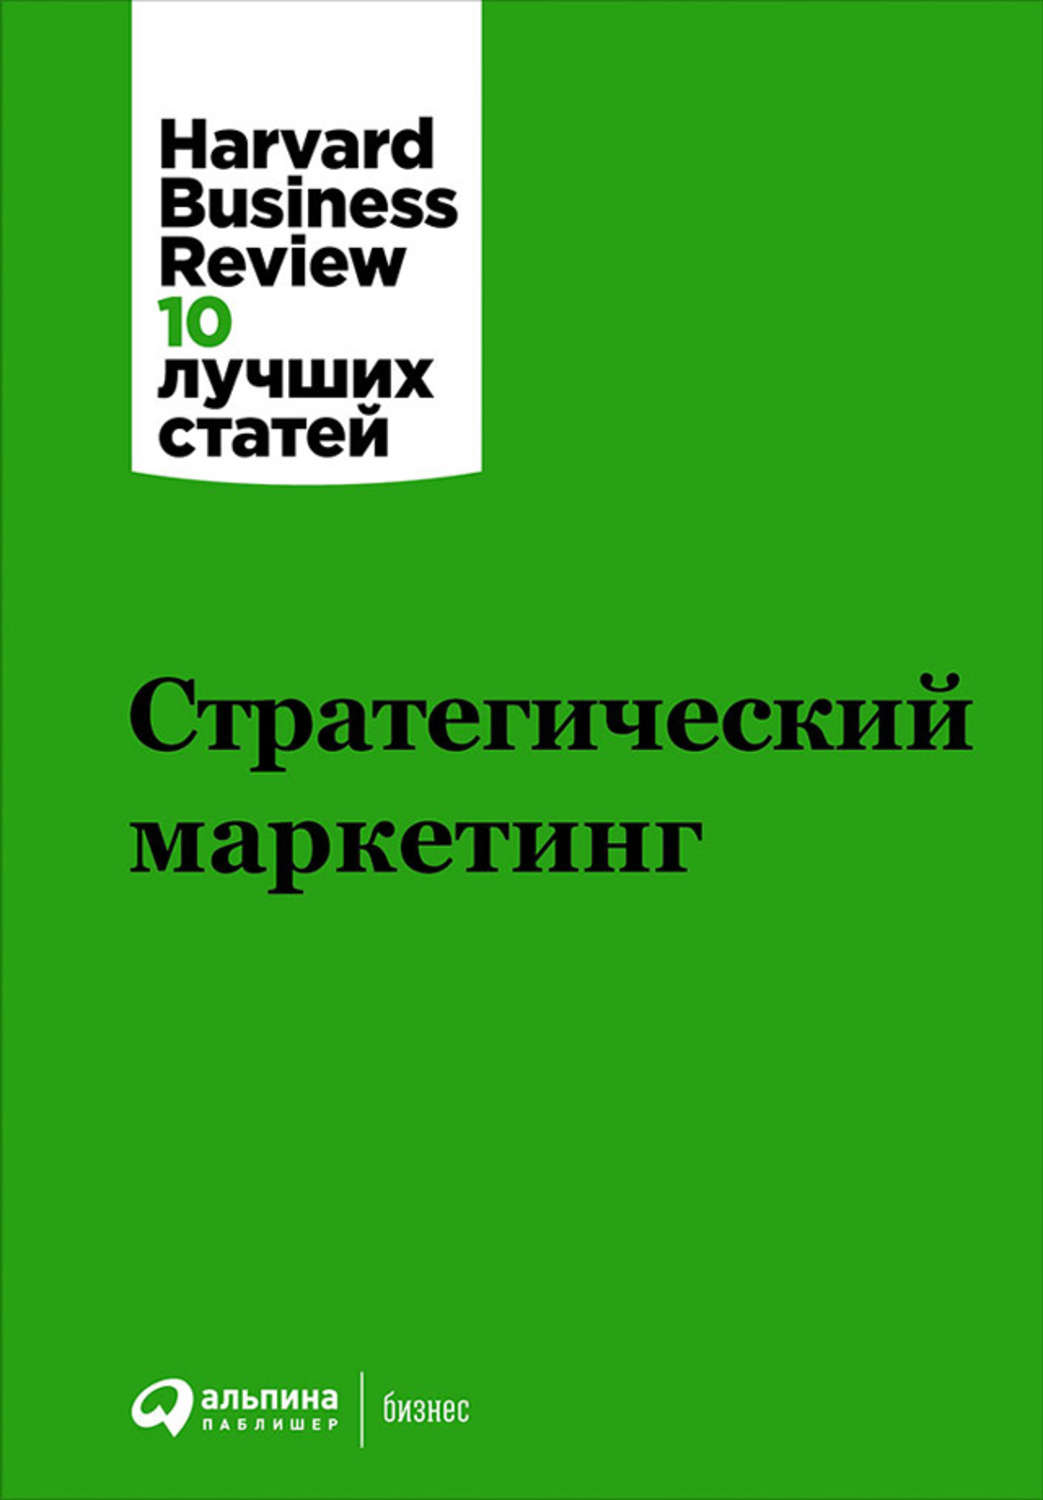 Стратегический маркетинг / Harvard Business Review / Москва: Альпина Паблишер, 2022.